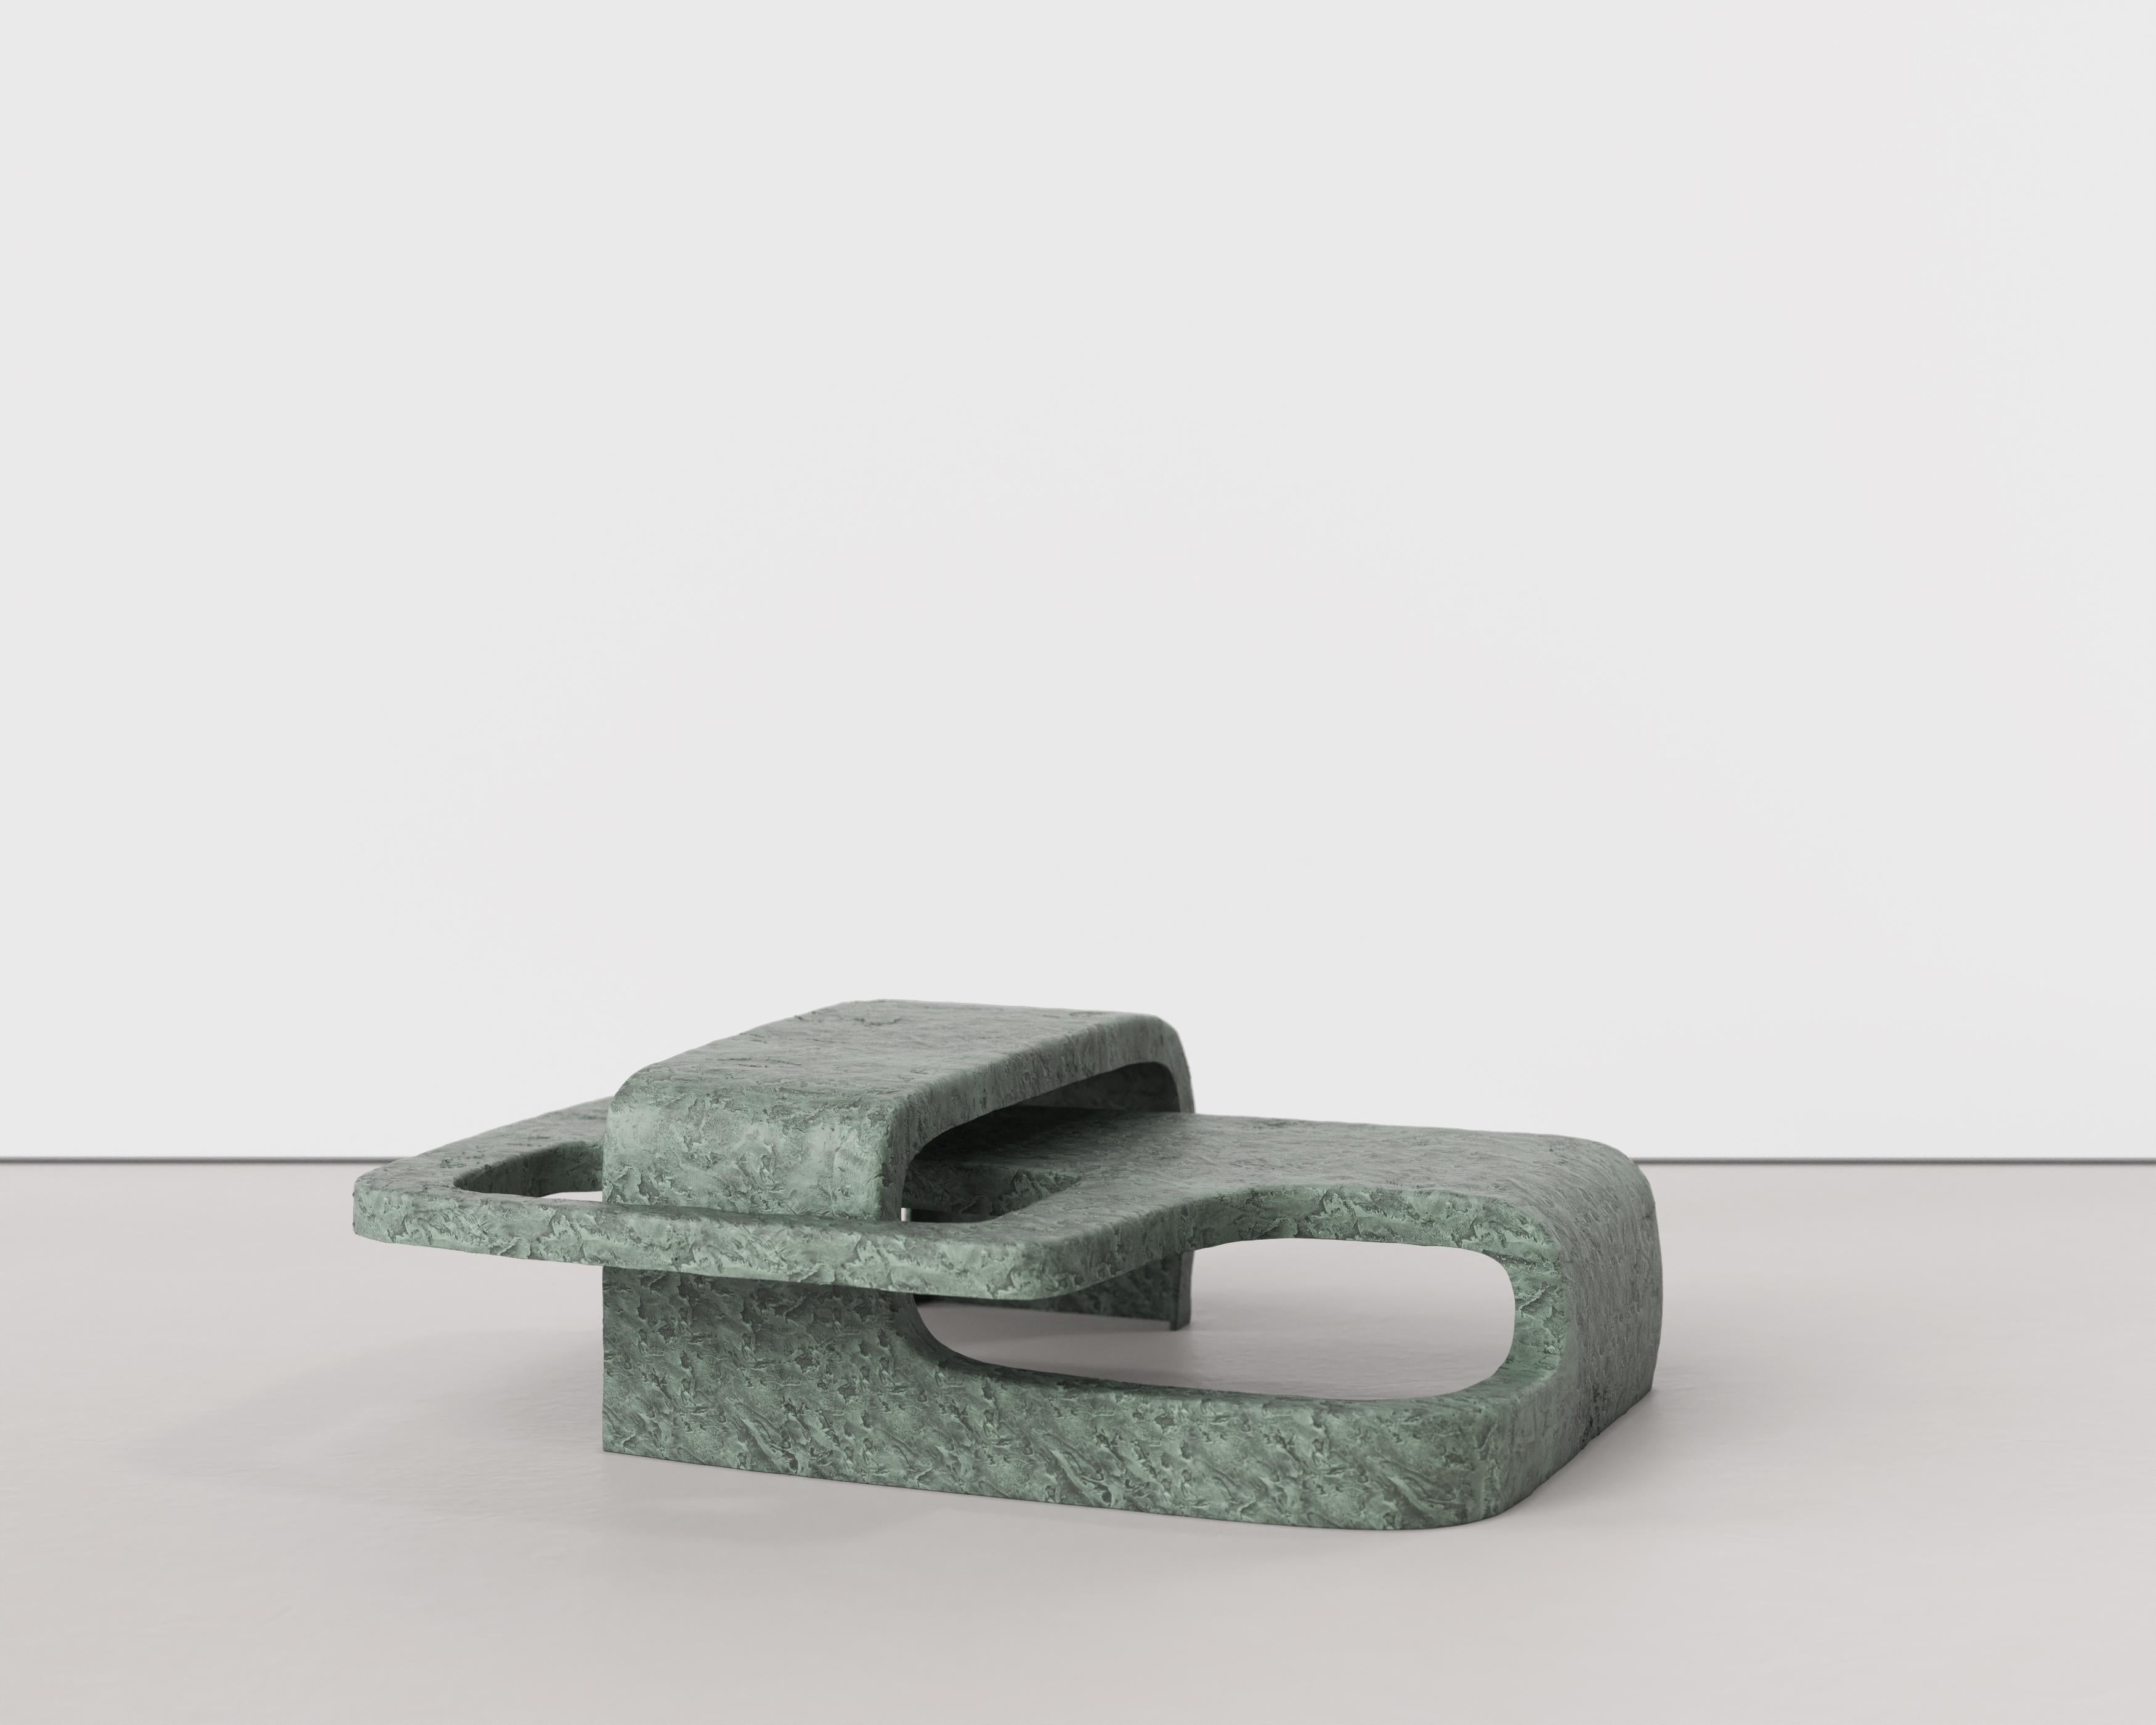 Italian Contemporary Limited Edition Bronze Table, Vertigo V2 by Simone Fanciullacci For Sale